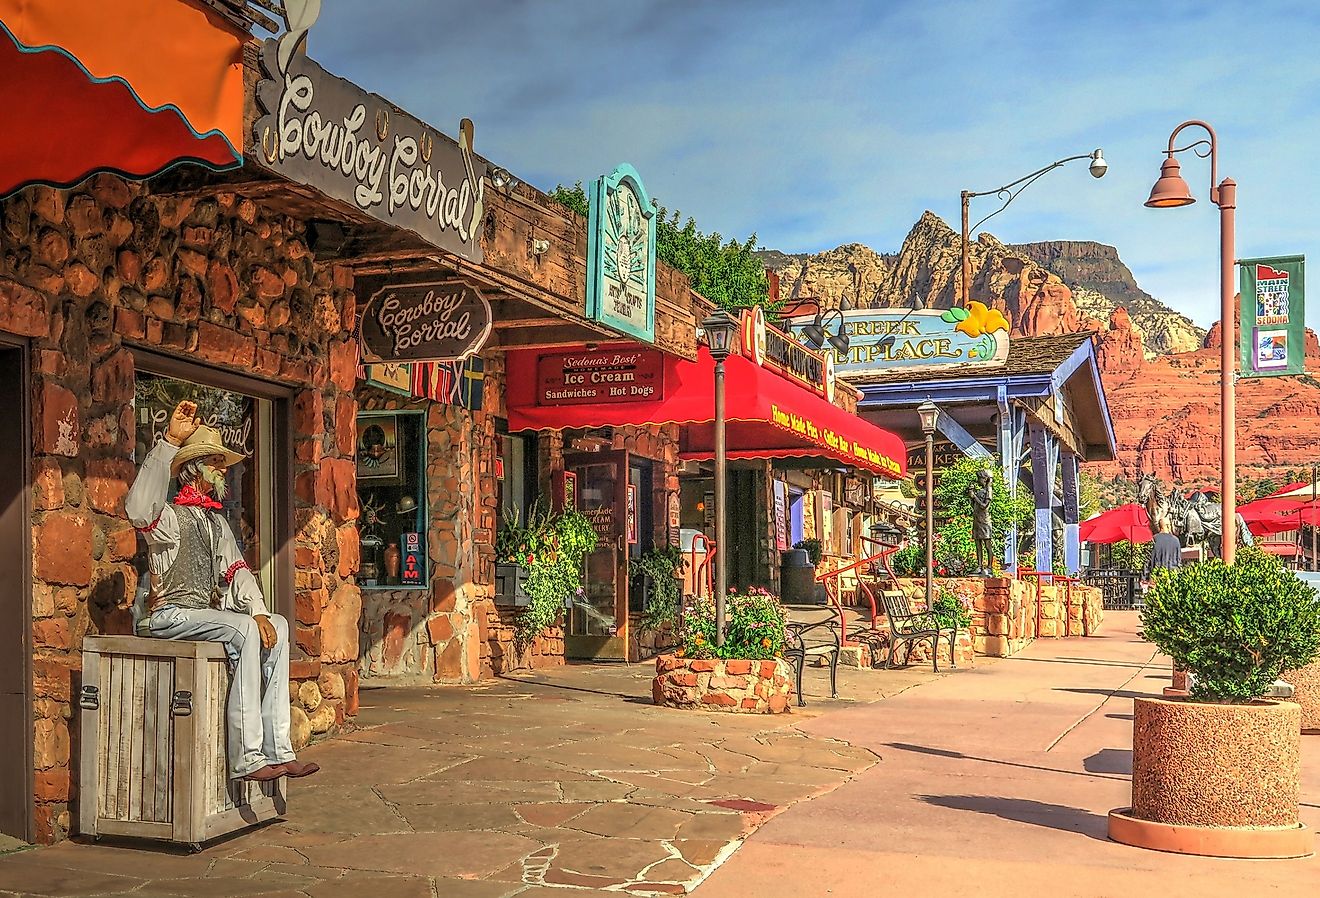 Downtown tourist area in quaint Sedona, Arizona. Image credit Lynne Neuman via Shutterstock.